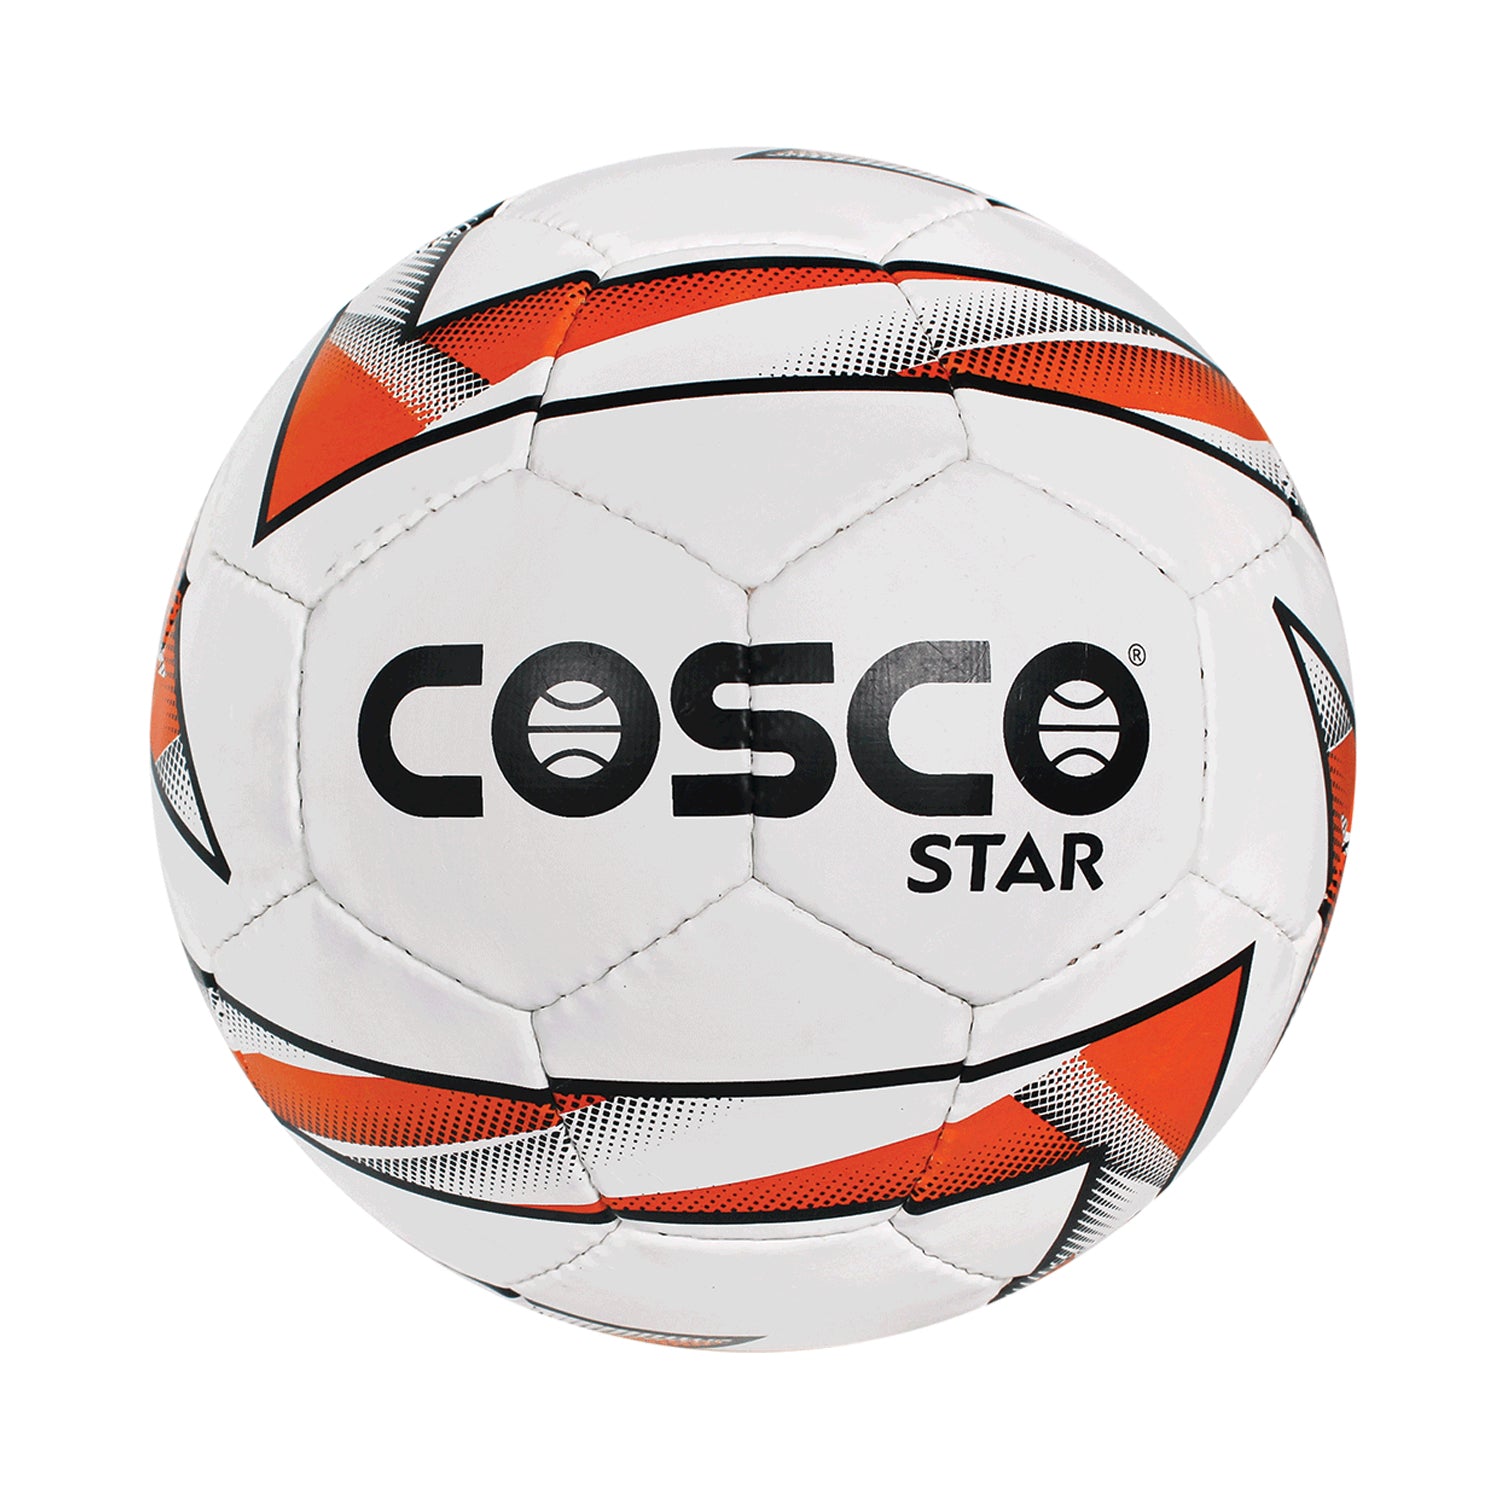 Cosco Star Football, White/Orange (Size 5) - Best Price online Prokicksports.com